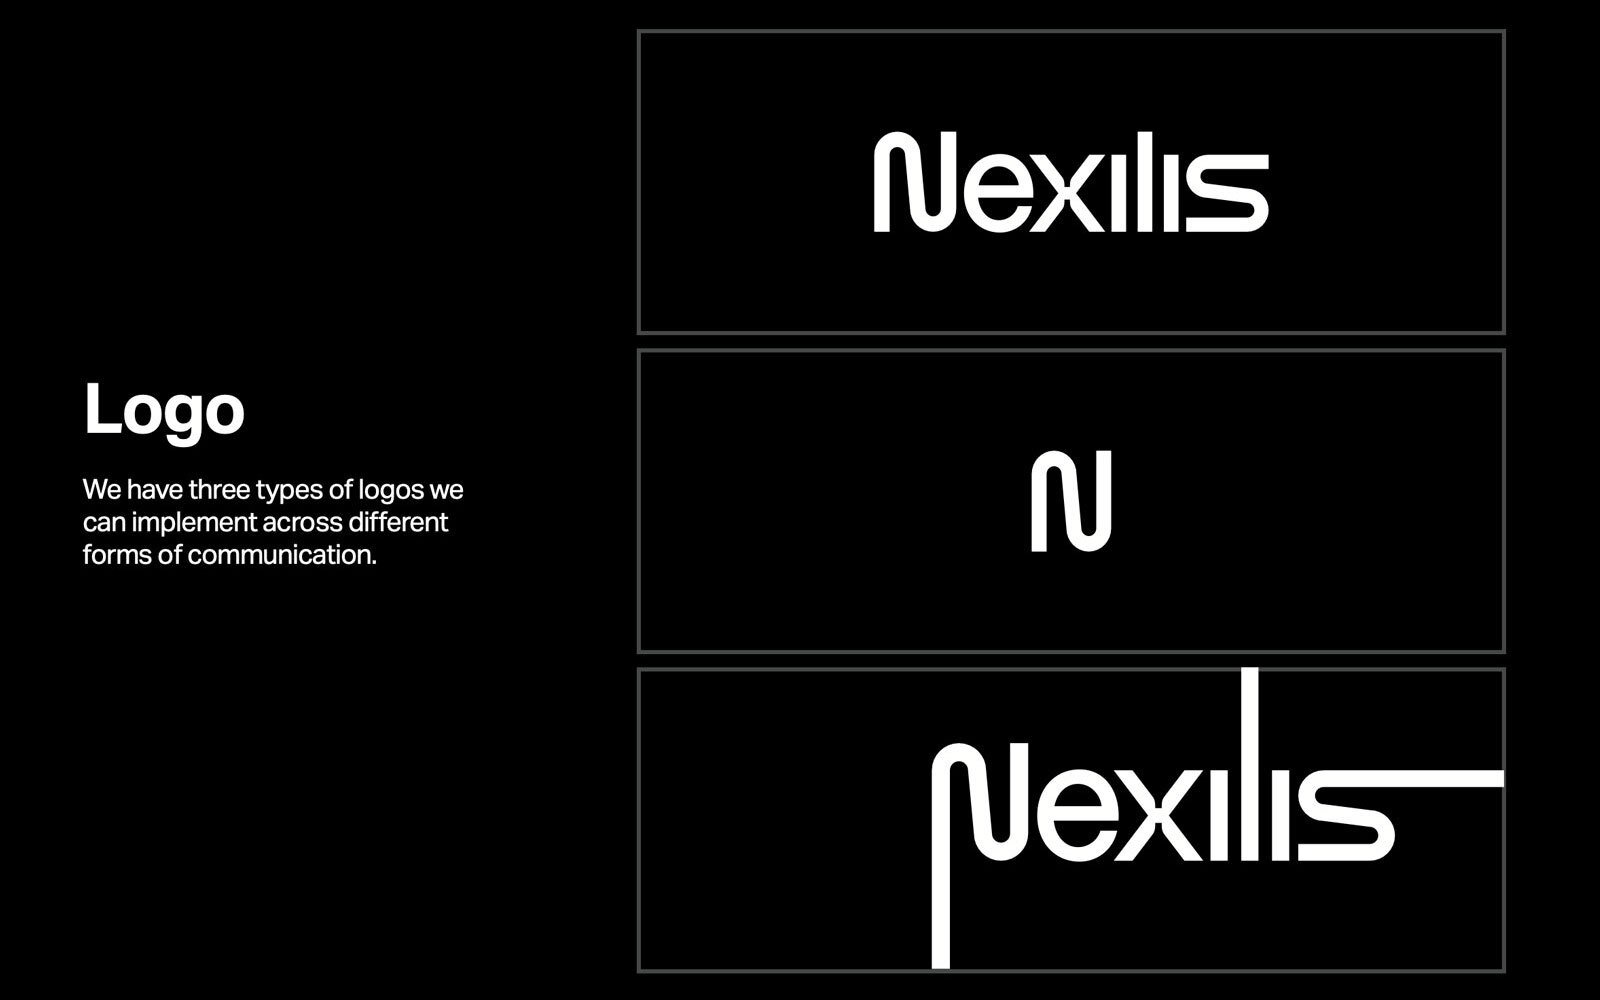 designs-3-nexilis-02